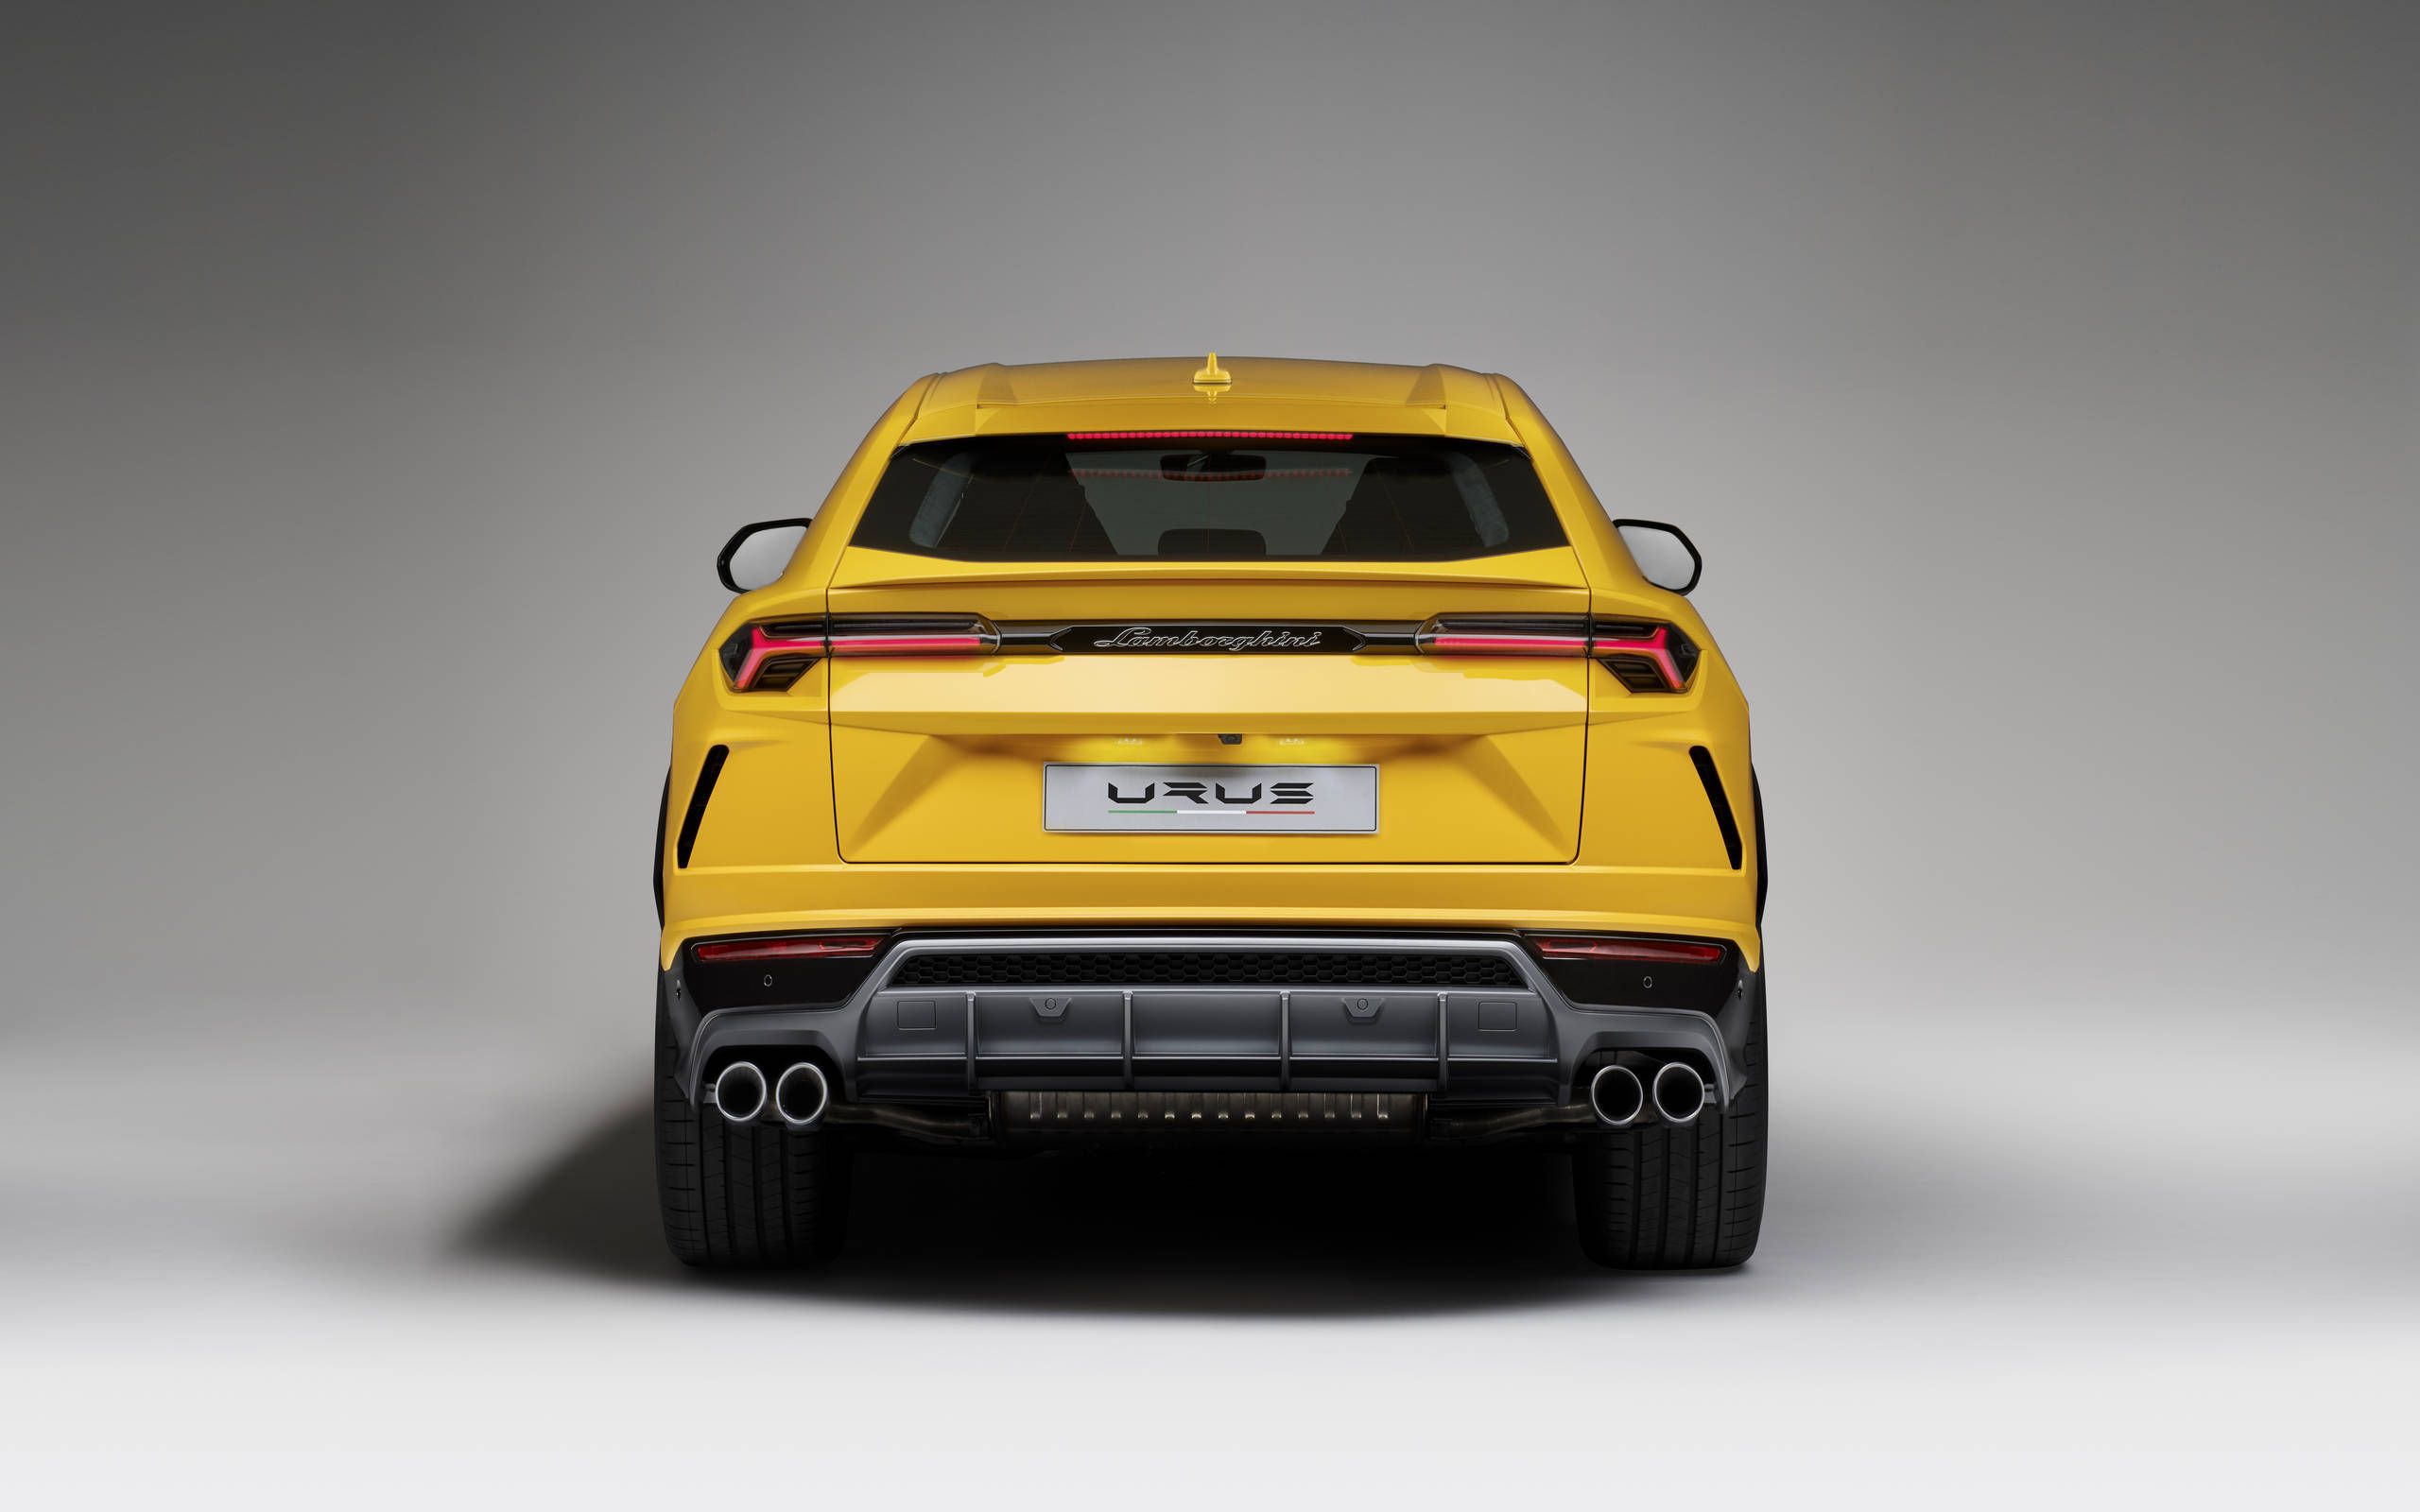 With 641 turbocharged horsepower, the 2019 Lamborghini Urus is the fastest  production SUV